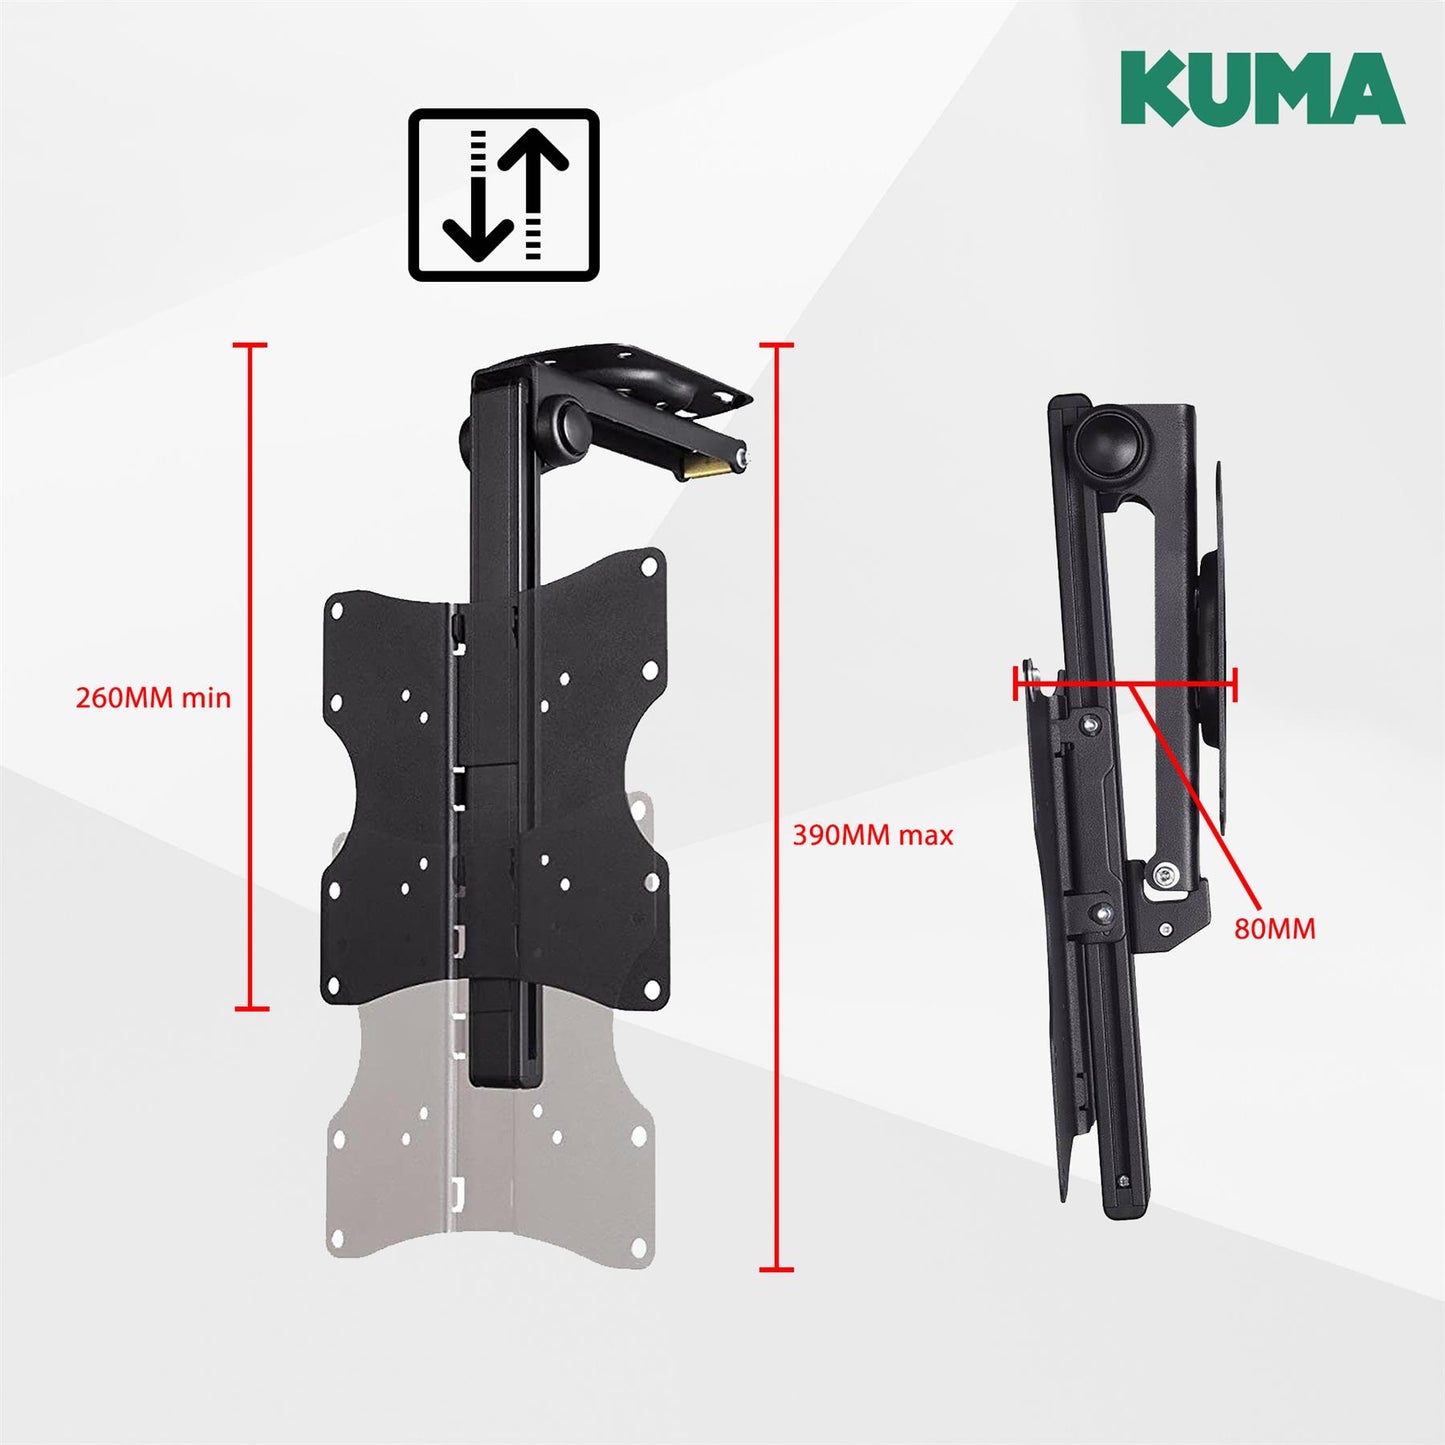 KUMA TV Wall Bracket - Tilt Swivel Folding VESA Mount for Curve and Flat Screen Television - Flip Down 17" 19" 22" 24" 26" 29" 32" 37" LCD LED Monitor - Ceiling or Under Cabinet - Slim & Universal